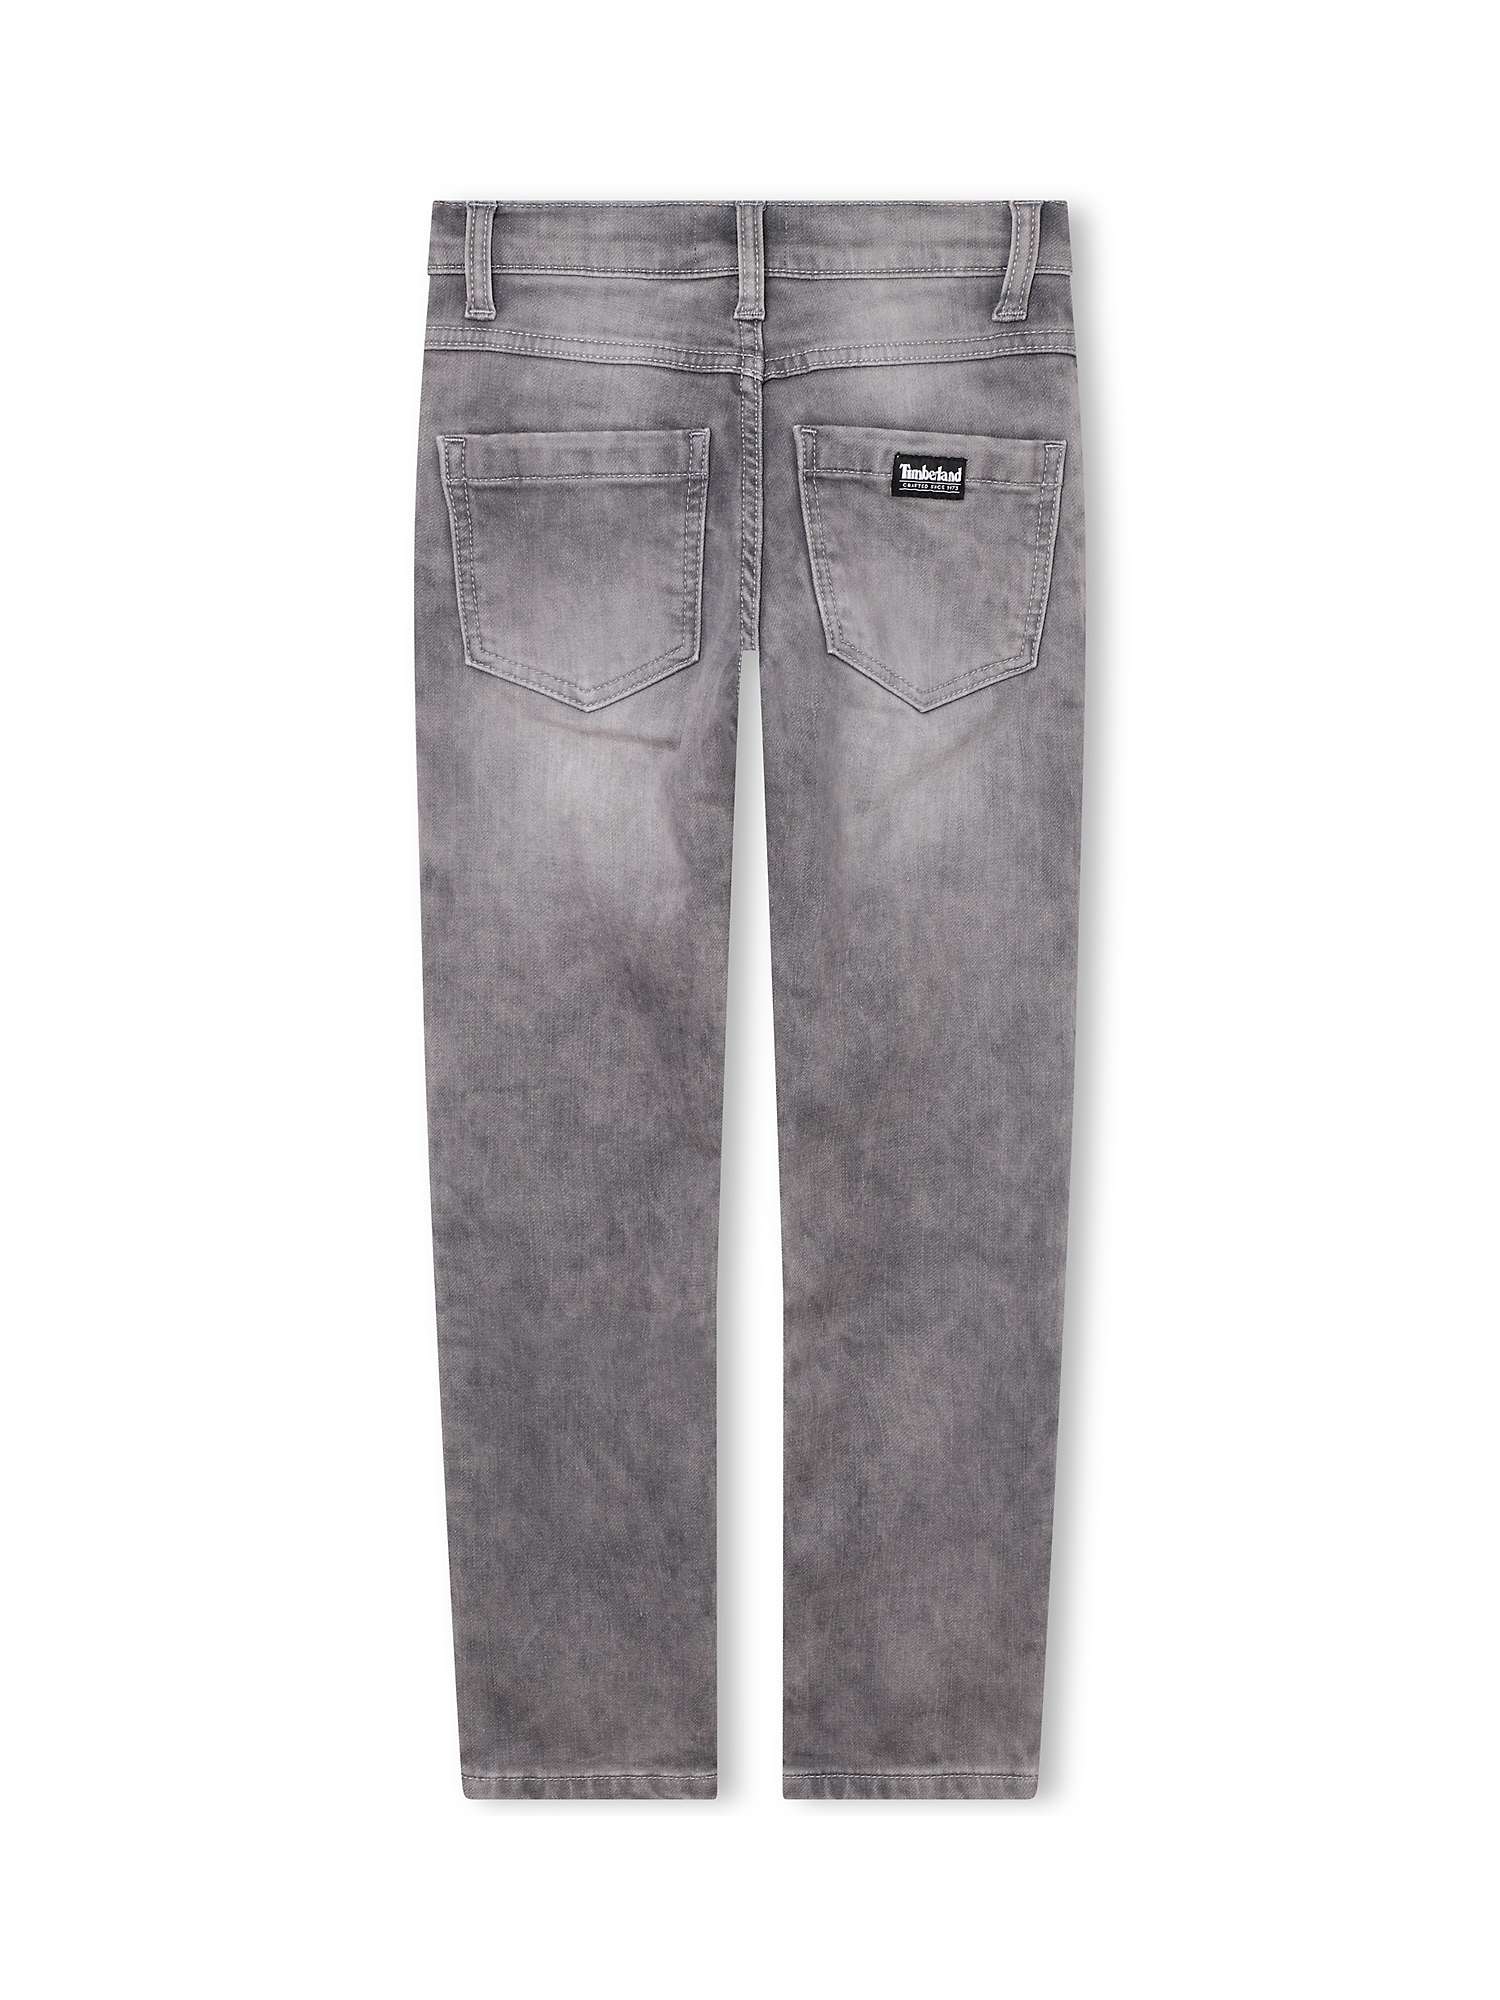 Buy Timberland Kids' Slim Fit Denim Jeans, Grey Online at johnlewis.com